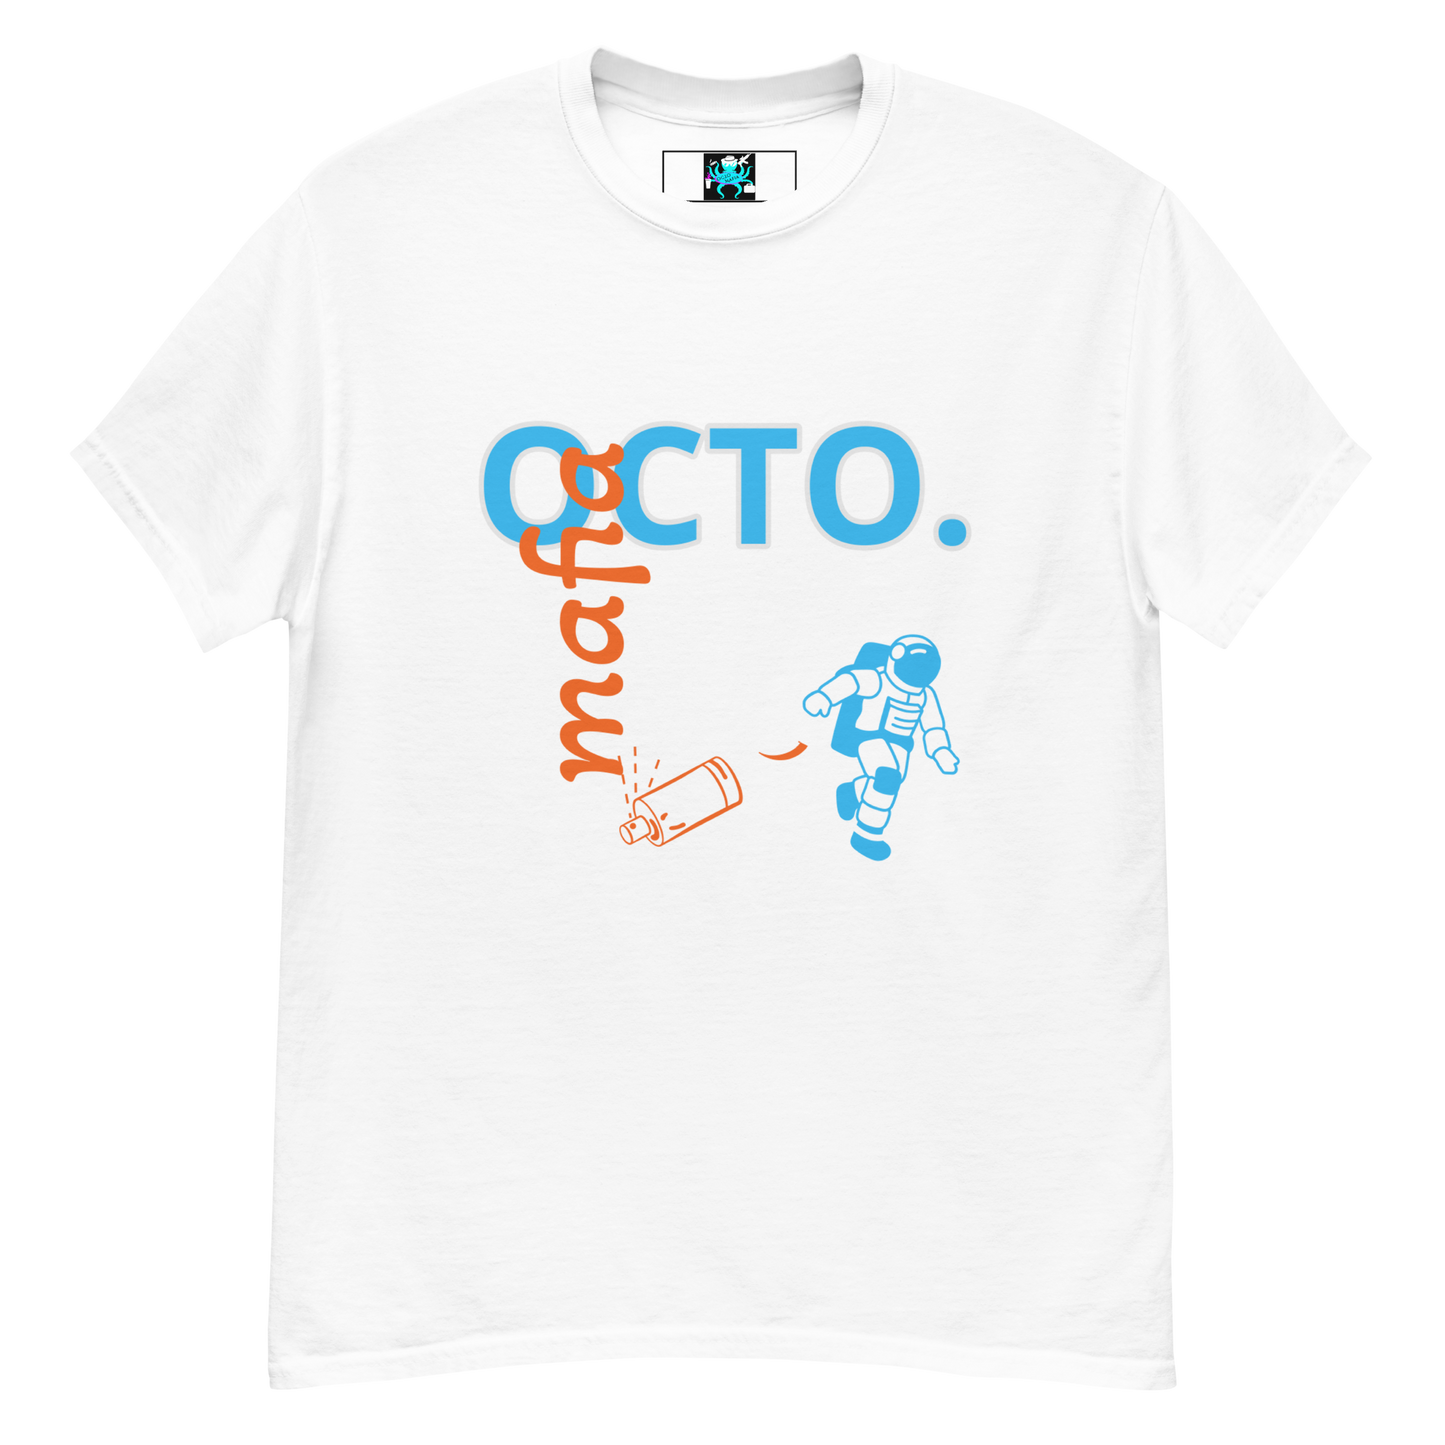 Octo. Mafia "Space race" T-shirt